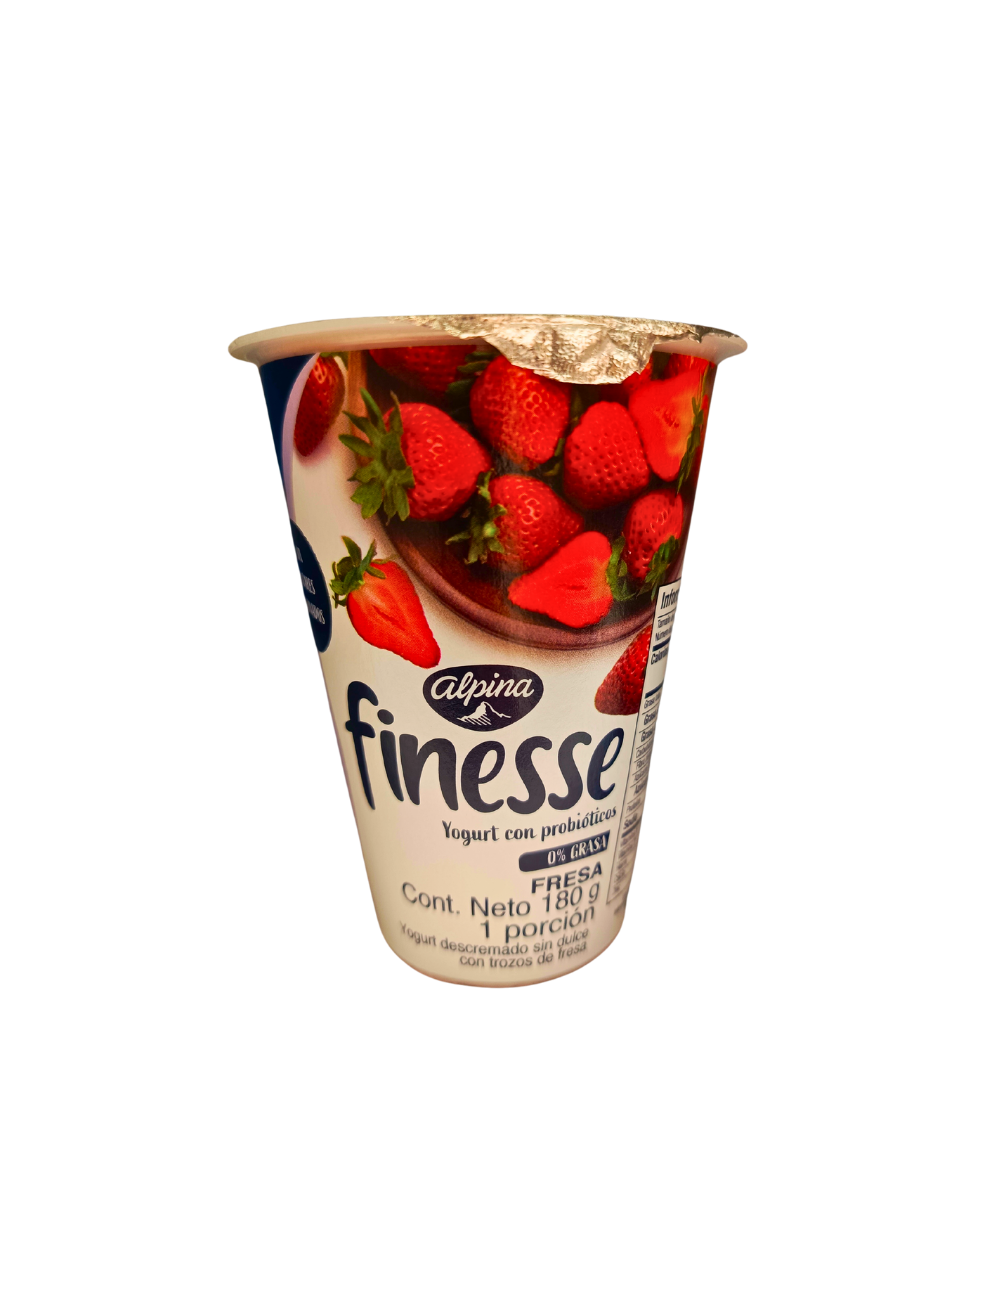 Yogurt Finesse Sabor Natural 180 g